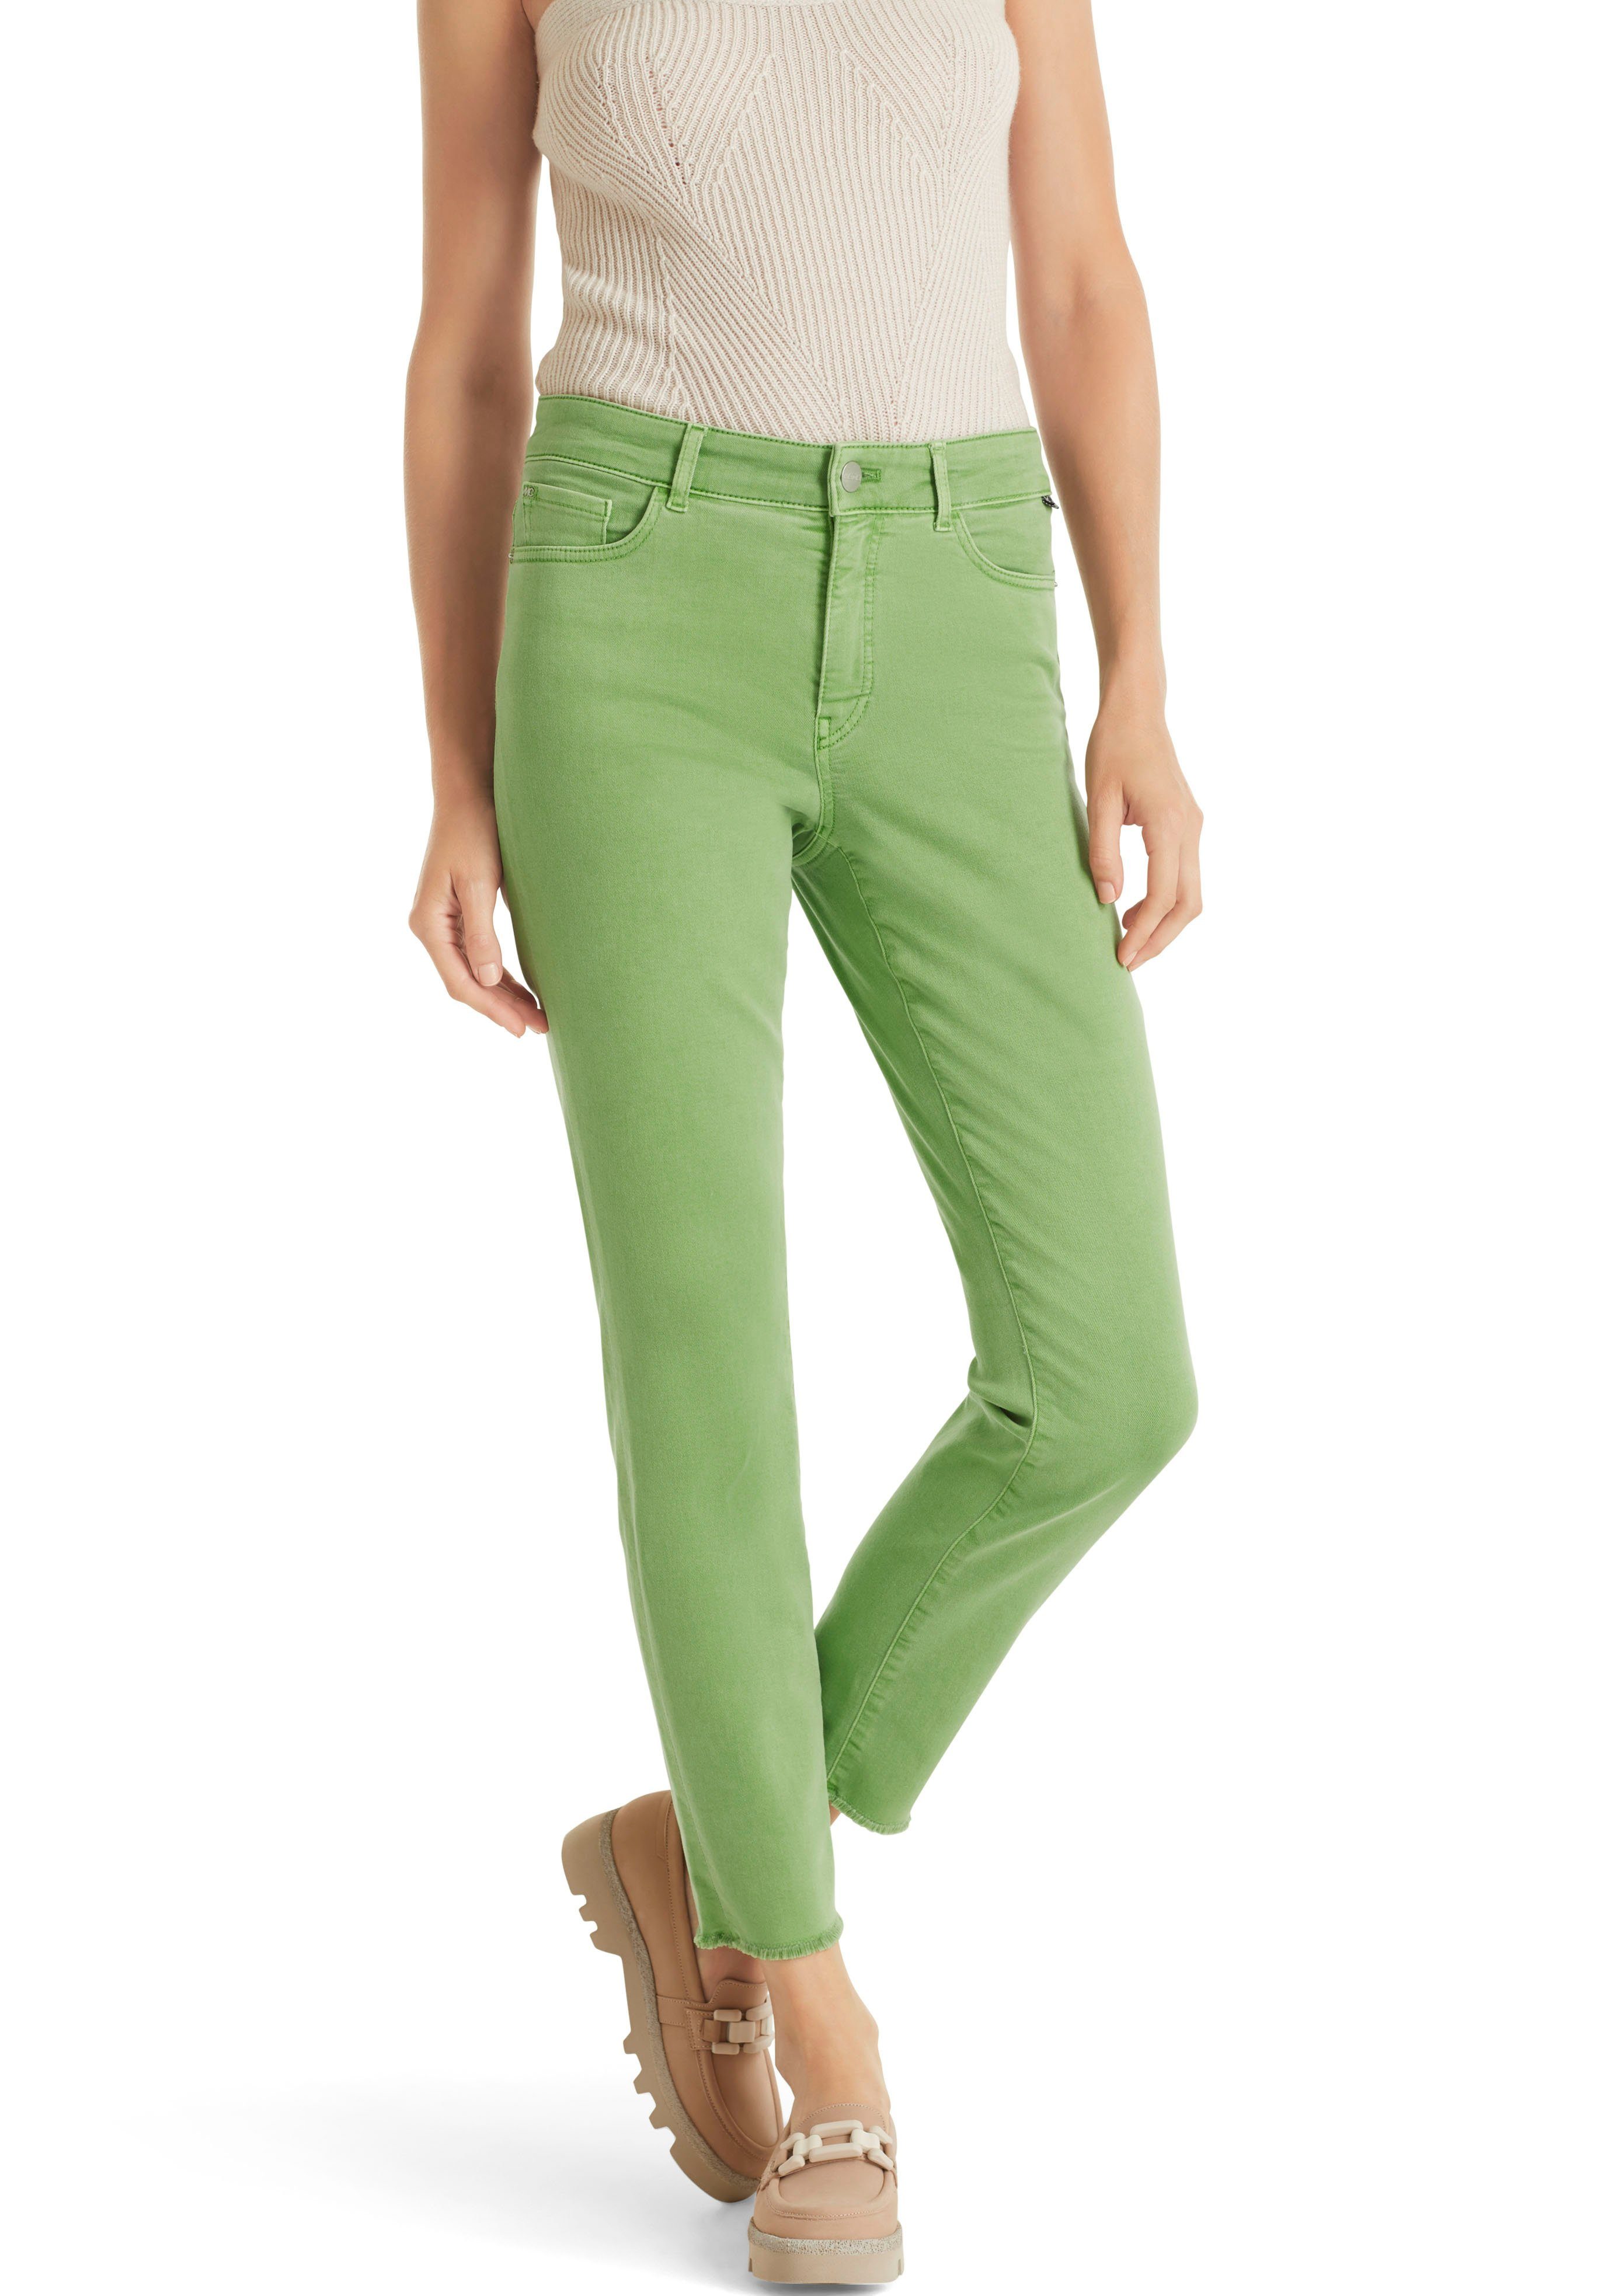 Leo Damenmode Premium "Rethink "Pants Jungle" Slim-fit-Jeans Cain SILEA Together" Marc Jeans